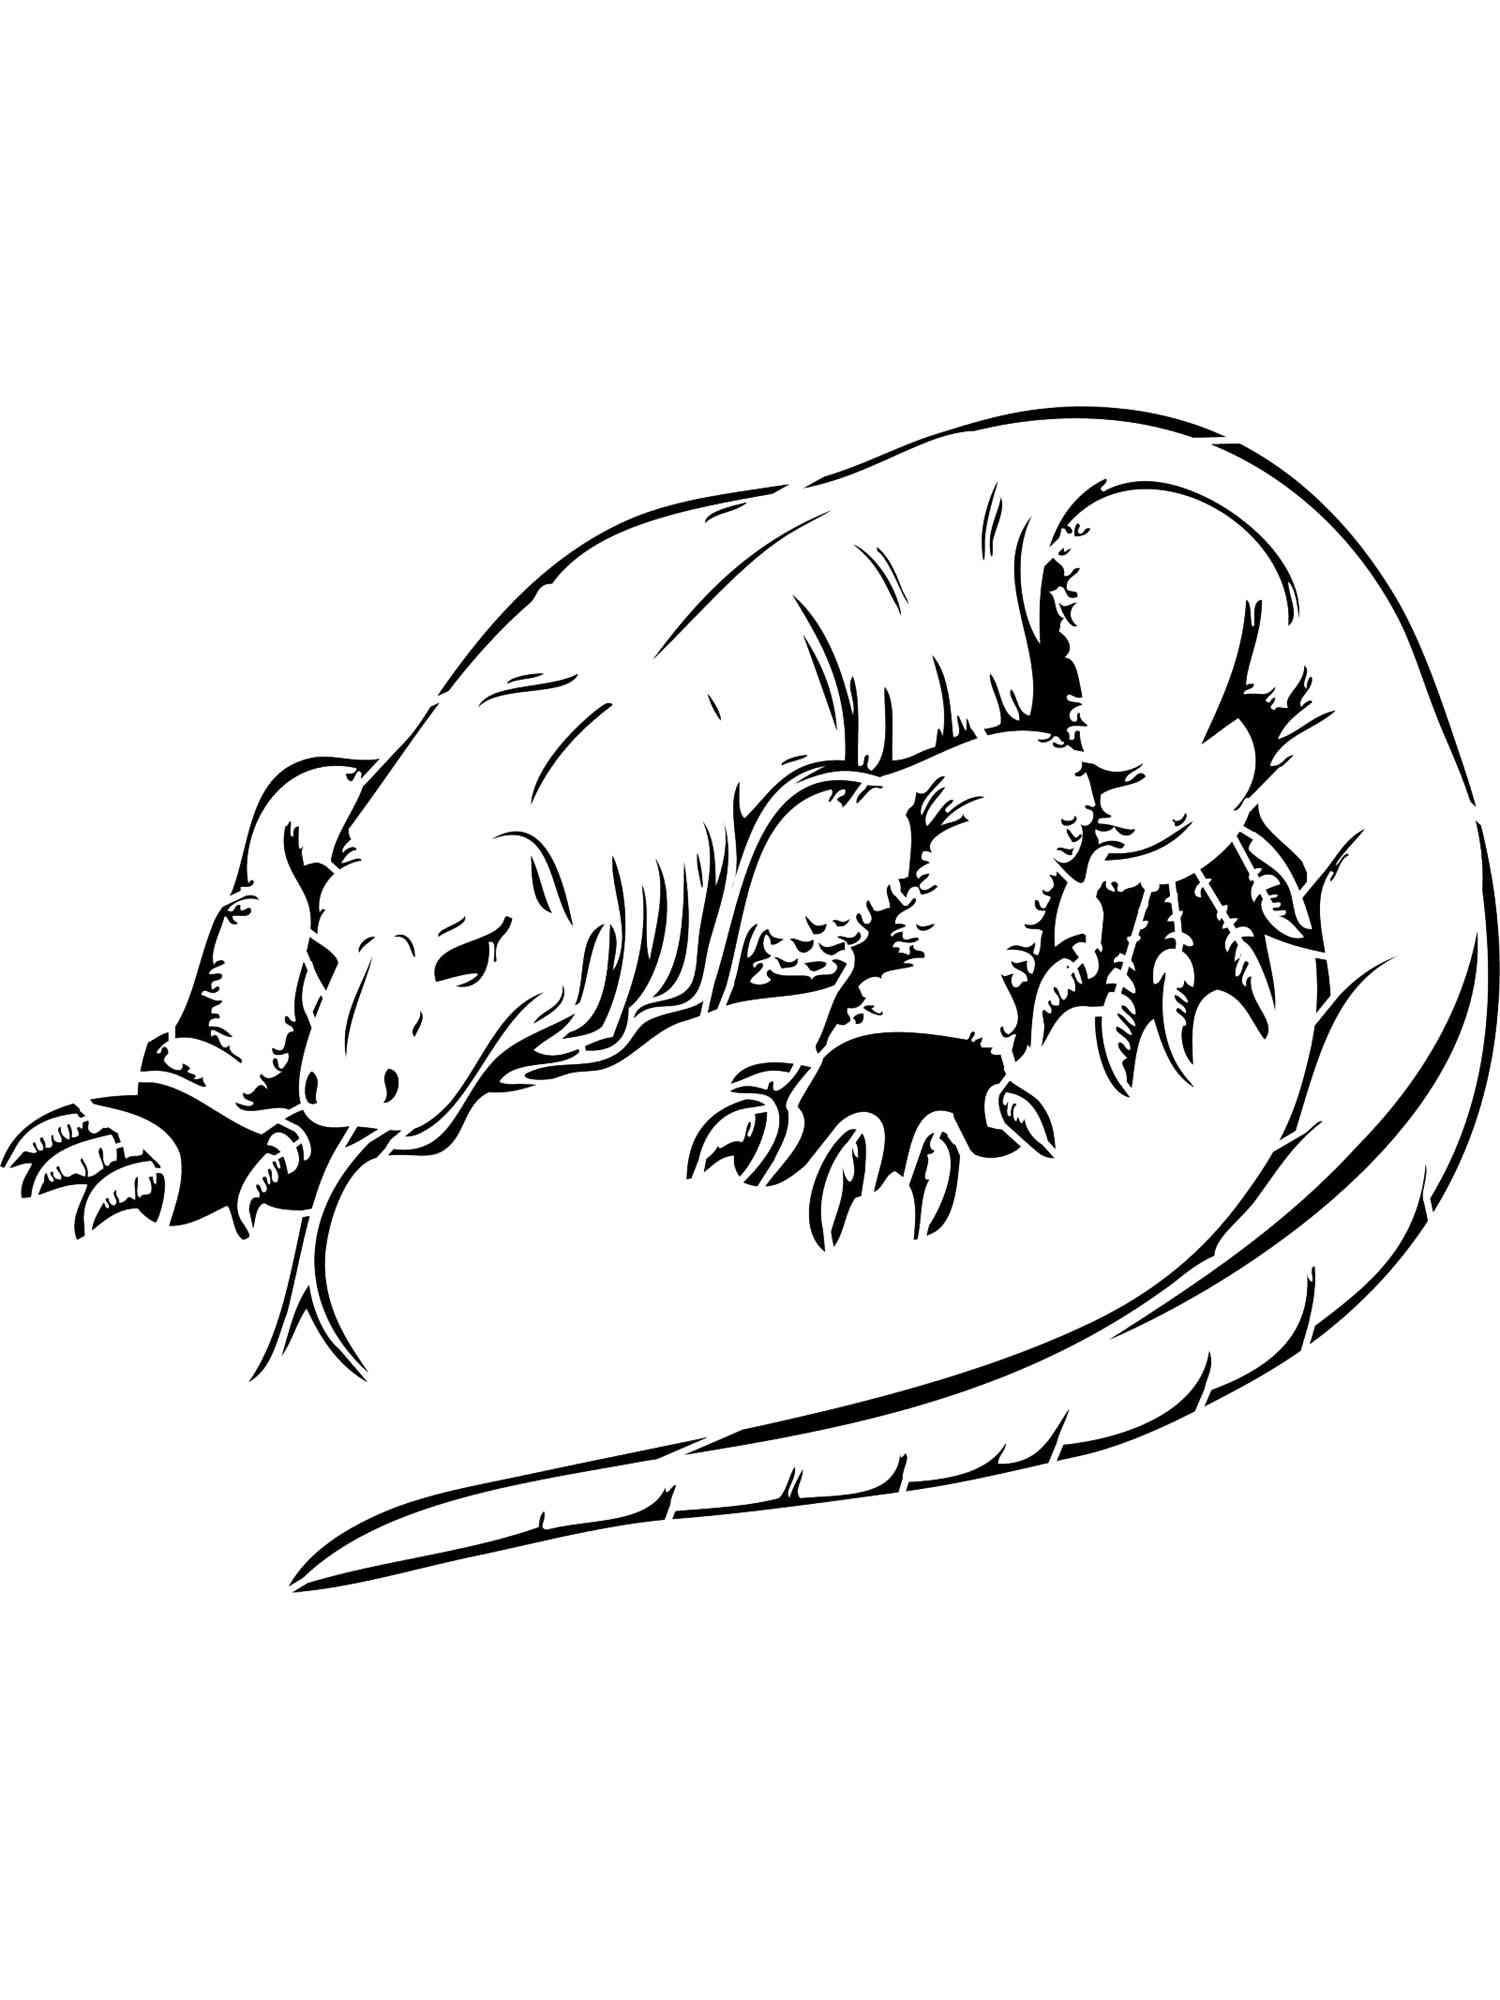 Giant Komodo Dragon coloring page